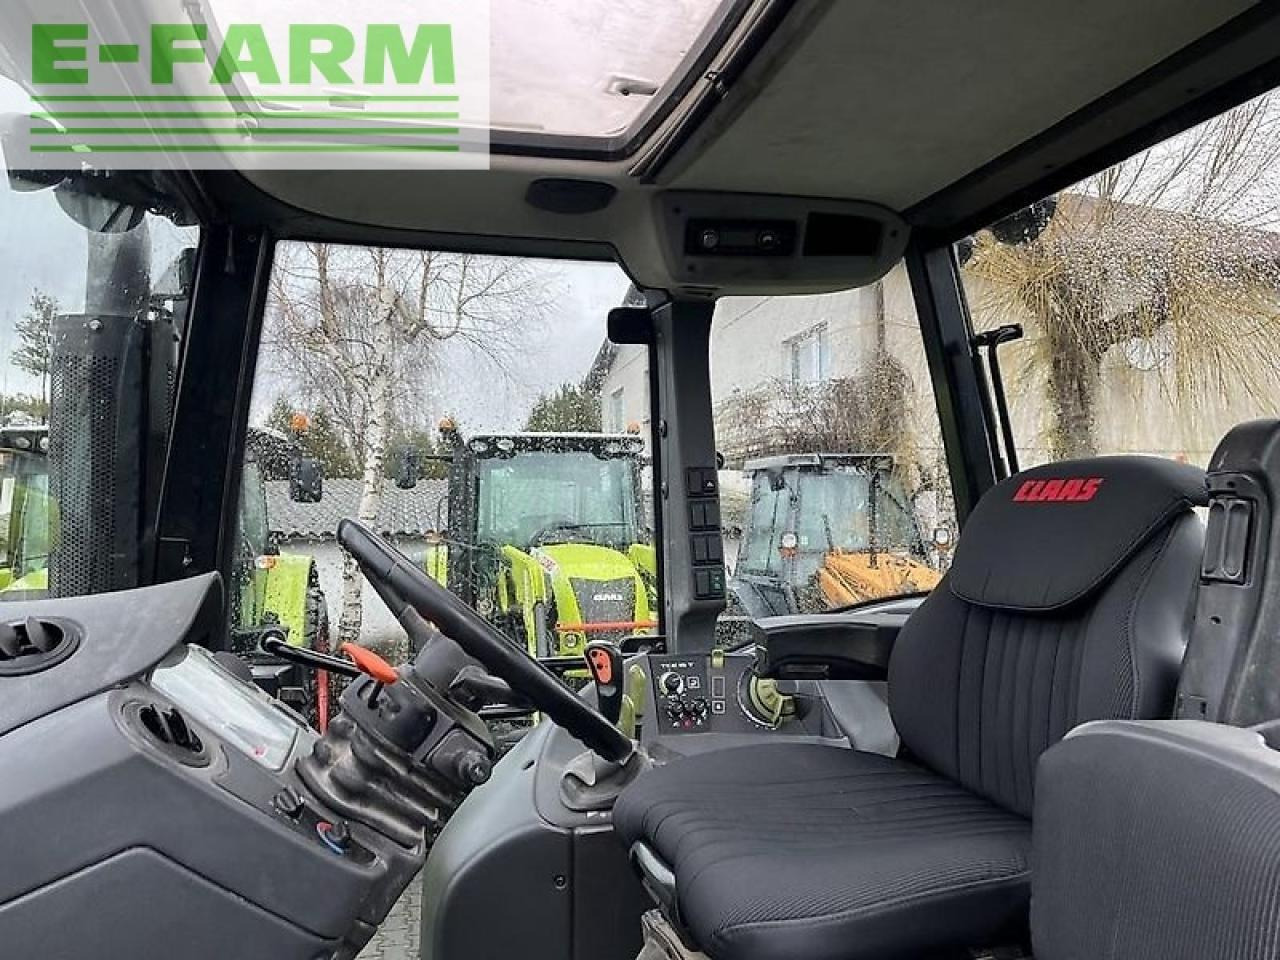 Farm tractor CLAAS arion 410 cis